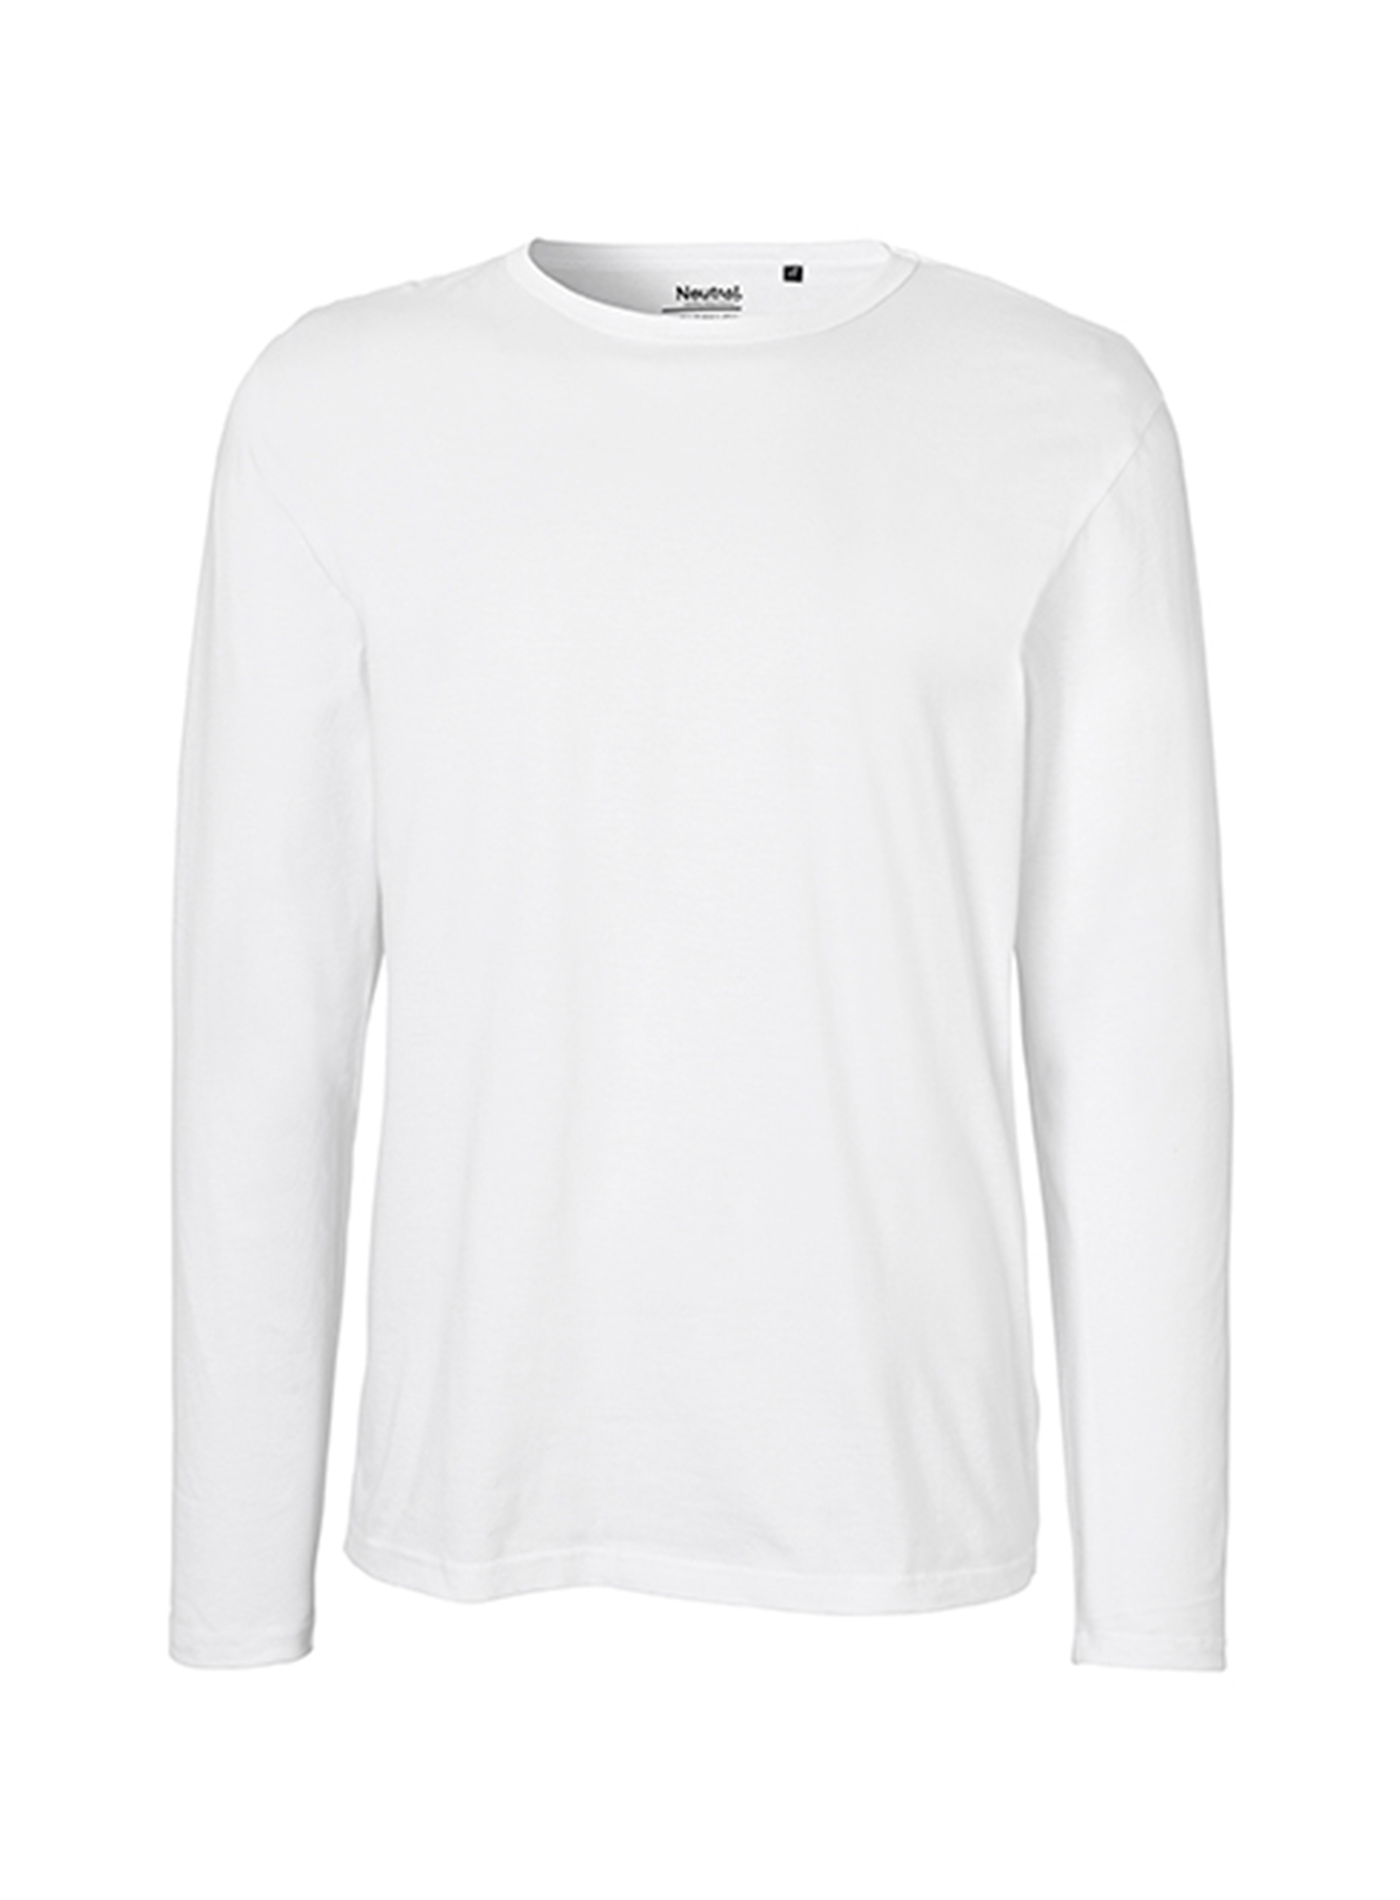 Pánské tričko s dlouhým rukávem Neutral - Bílá XL